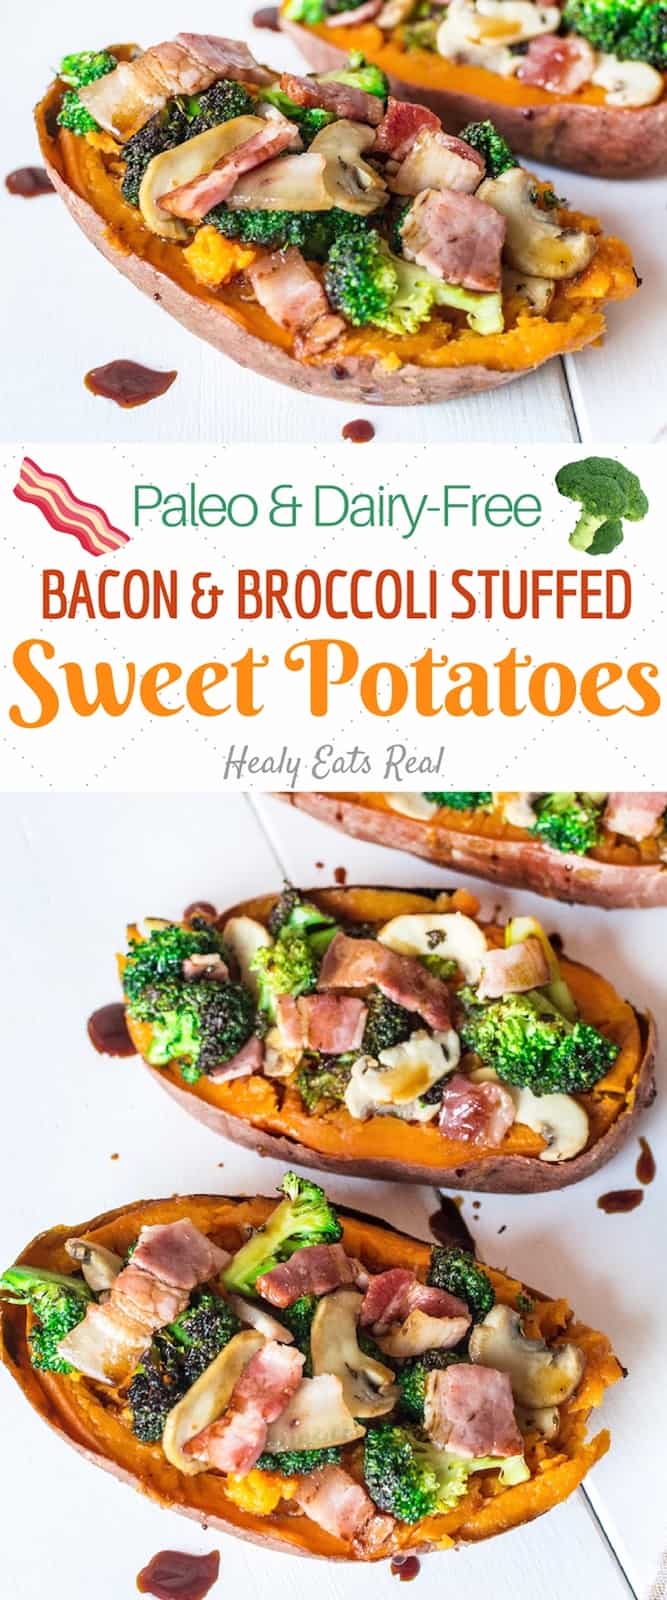 Bacon & Broccoli Stuffed Sweet Potatoes (Paleo & Dairy-Free)